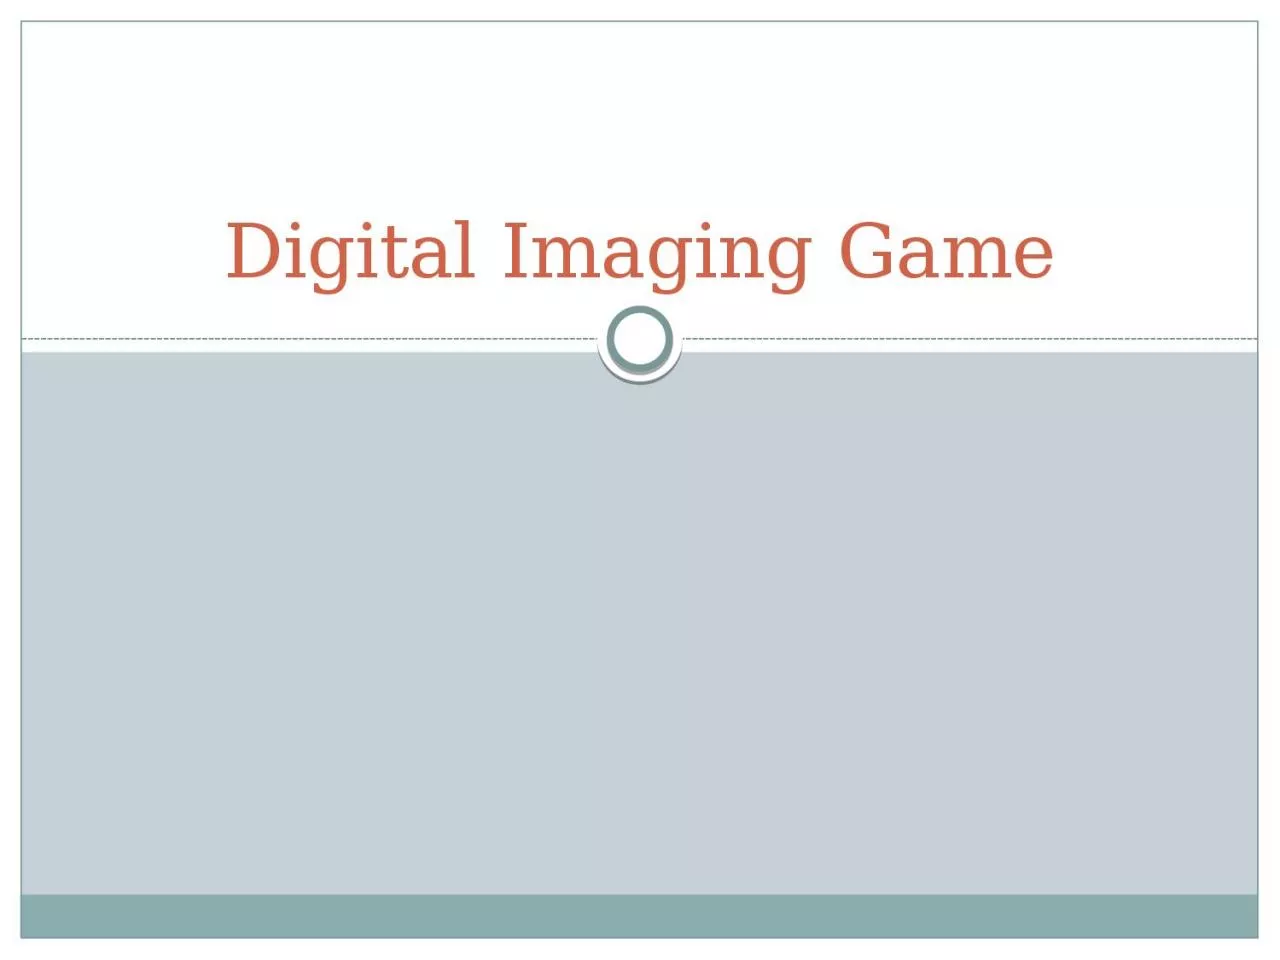 Digital Imaging Game What Does Normal Look Like?